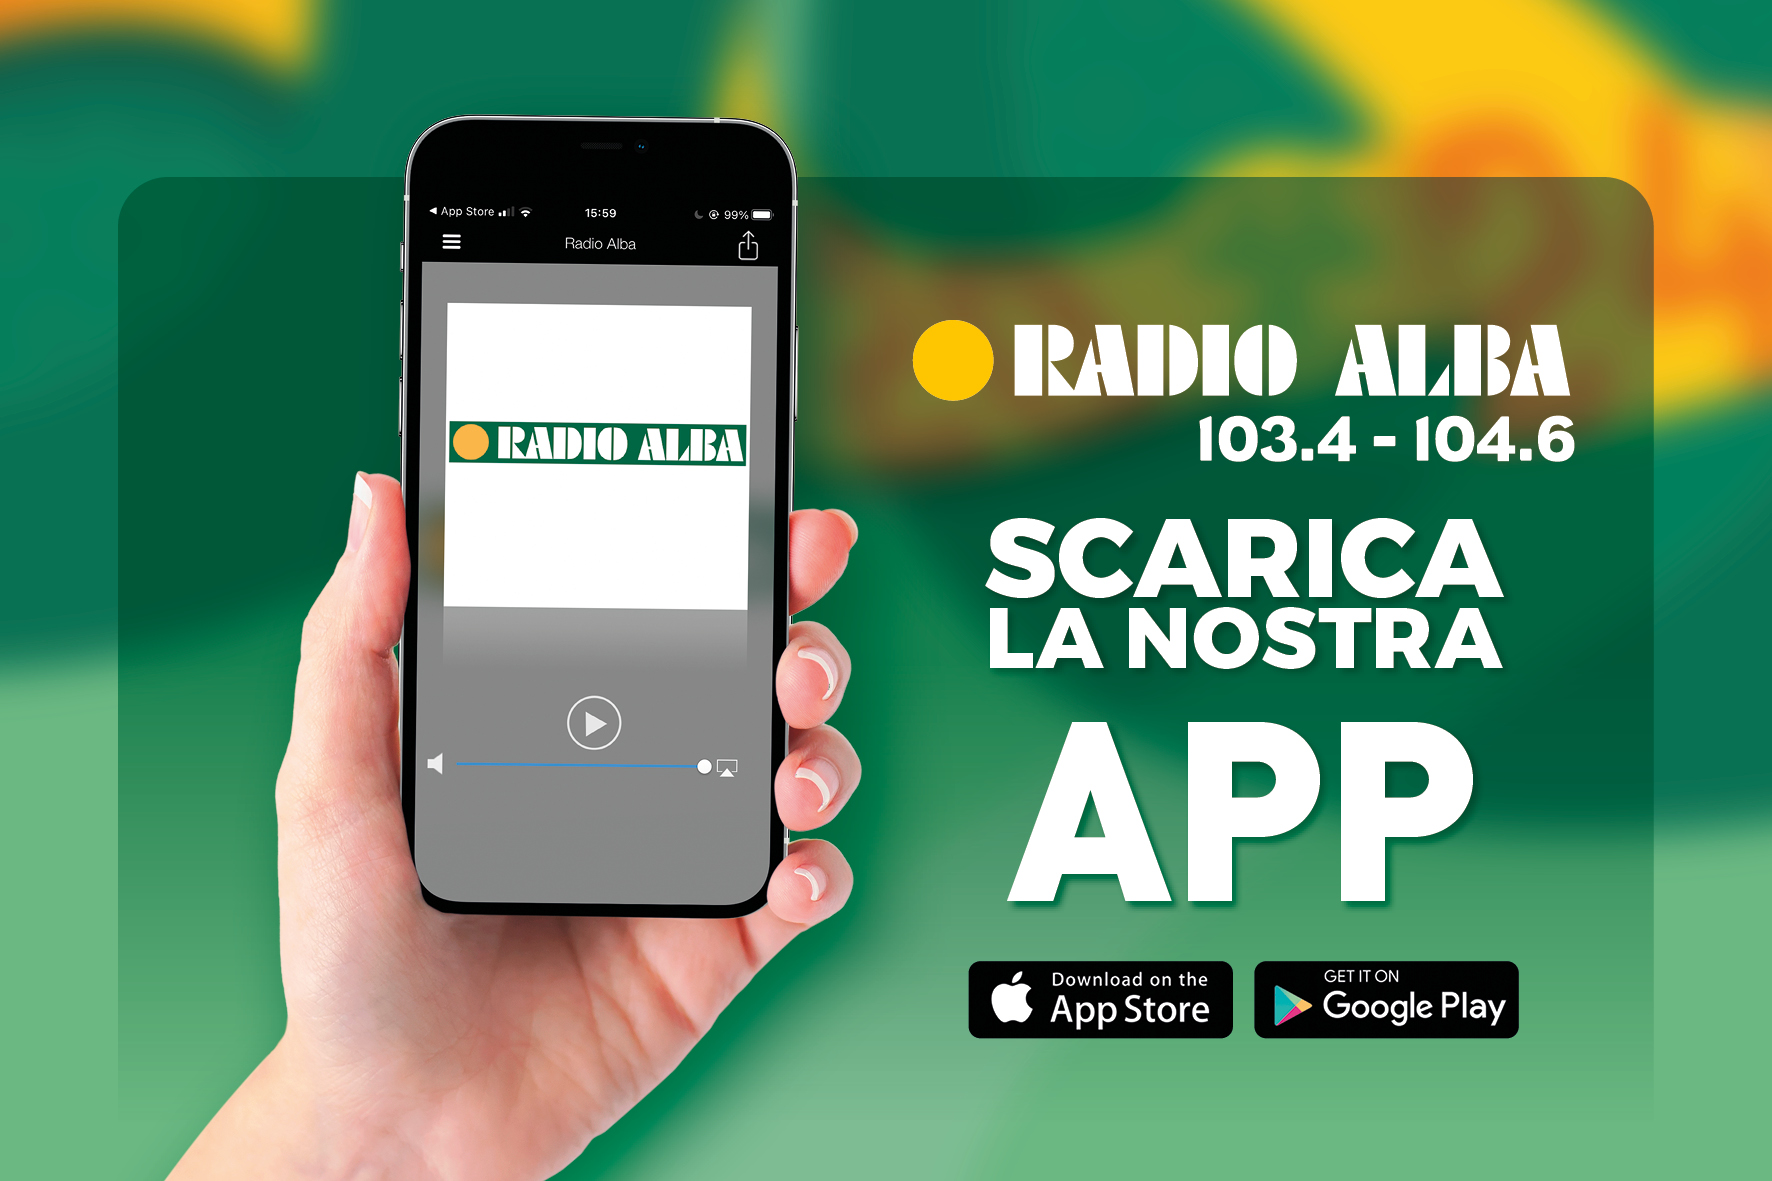 Radio Alba App